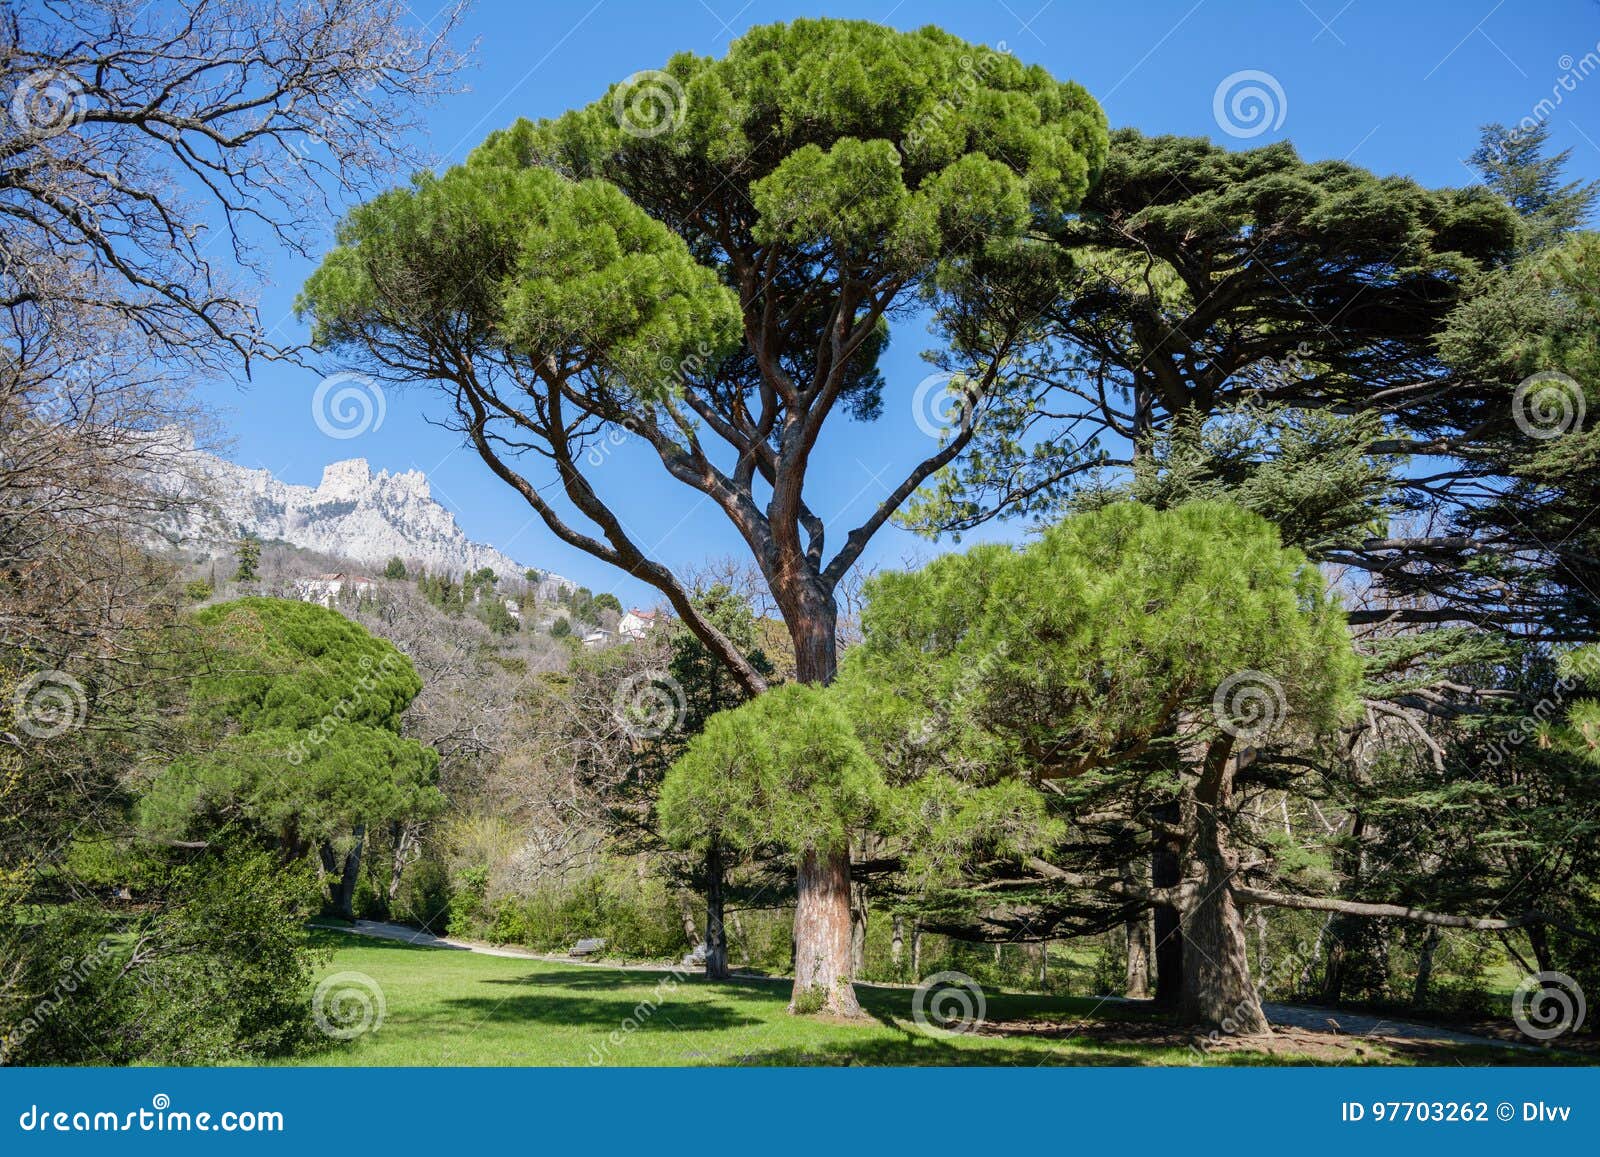 italian-stone-pine-pinus-pinea-front-ai-petri-mountain-background-crimea-vorontsov-palace-park-alupka-region-97703262.jpg